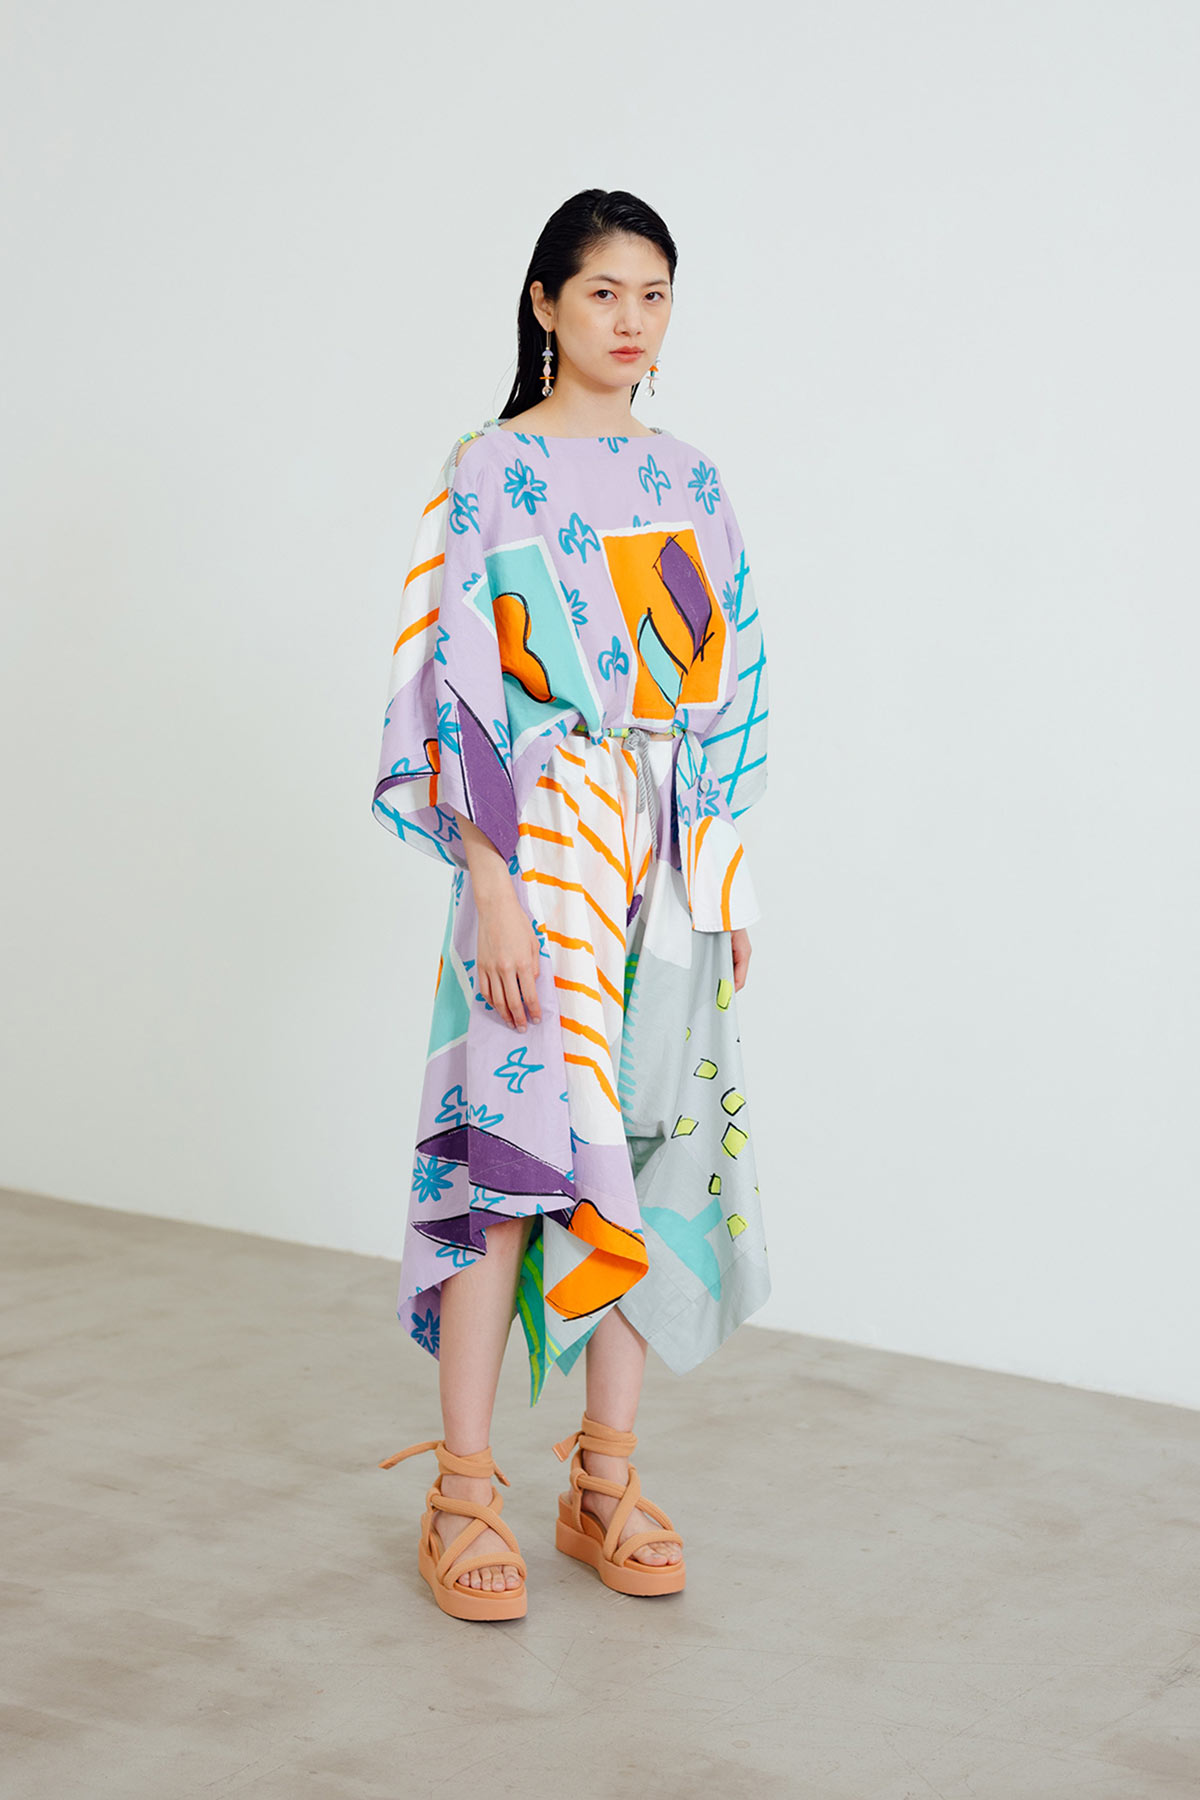 Issey Miyake Spring/Summer 2021 | The Fashionography